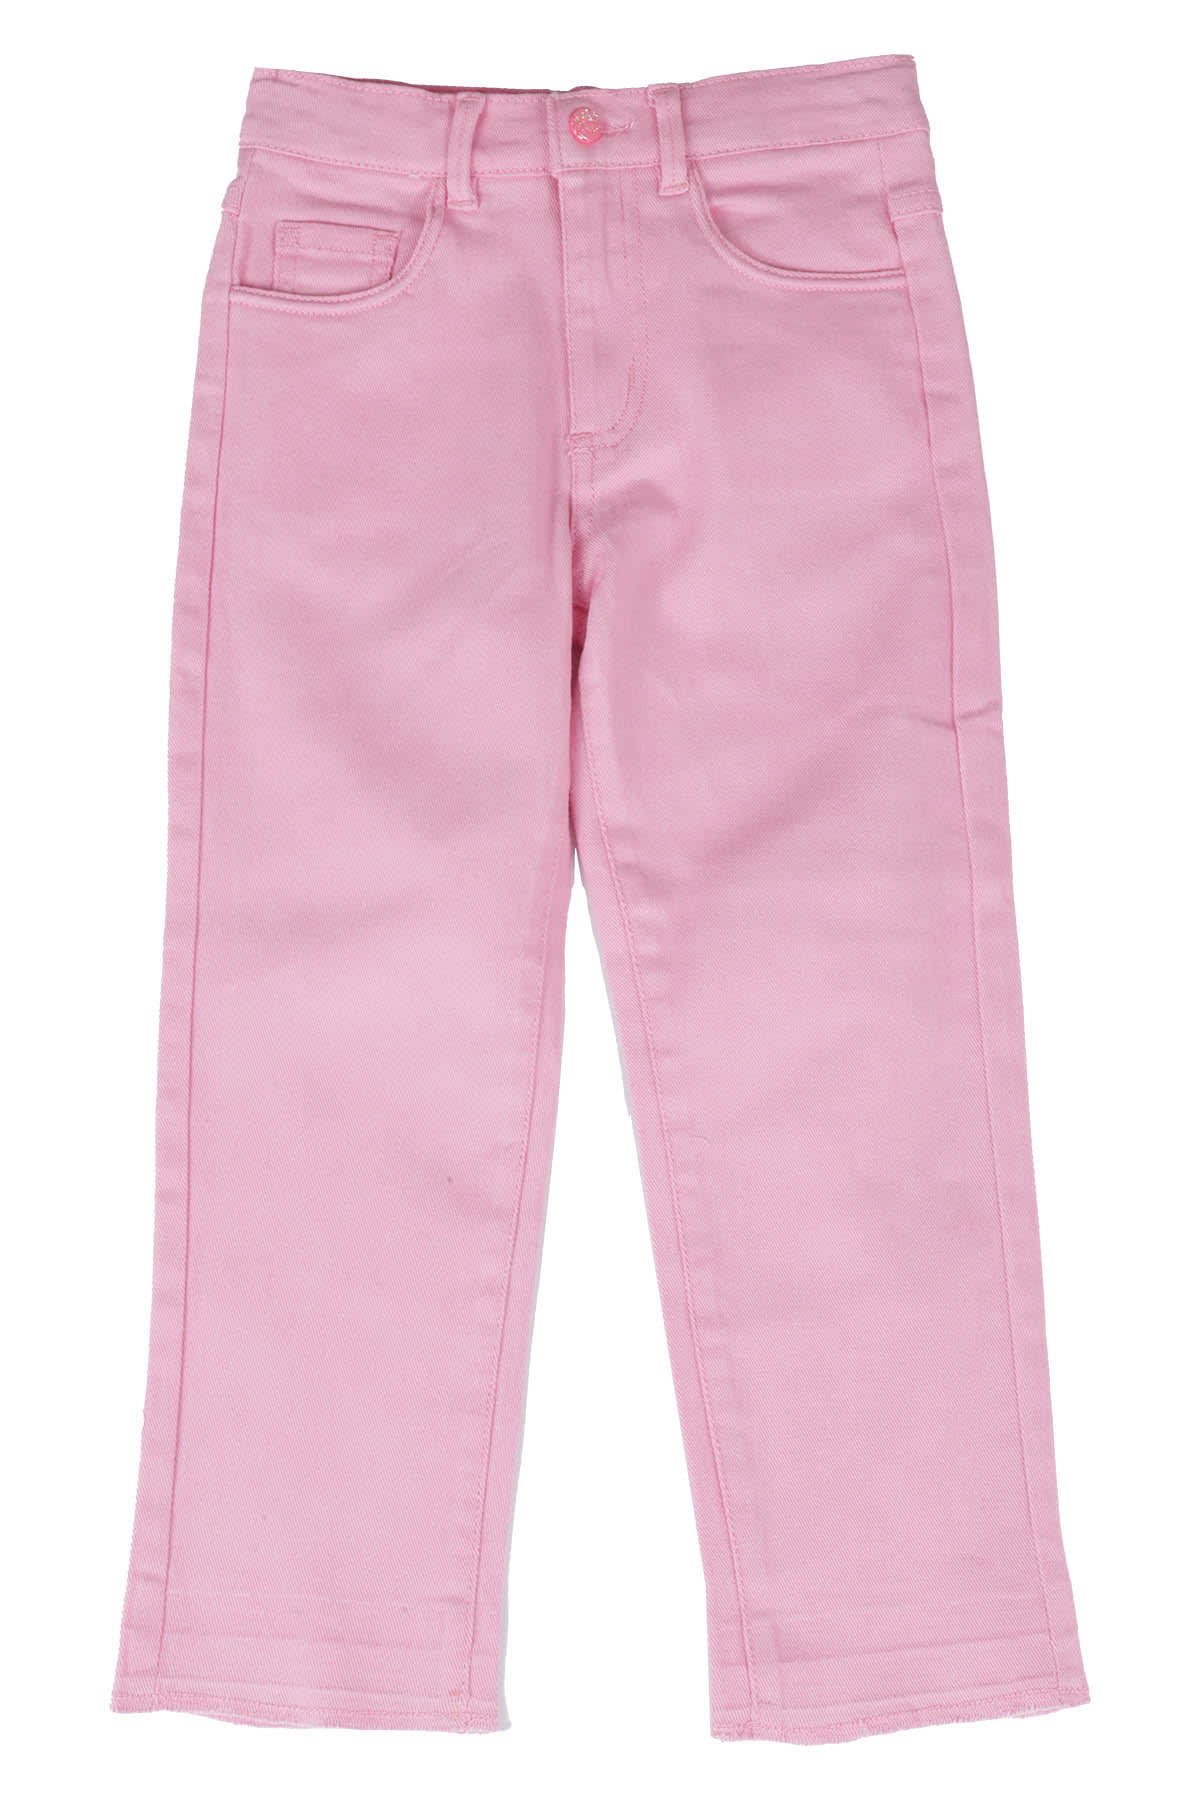 Billieblush Kids' Pantalone In C Rosa